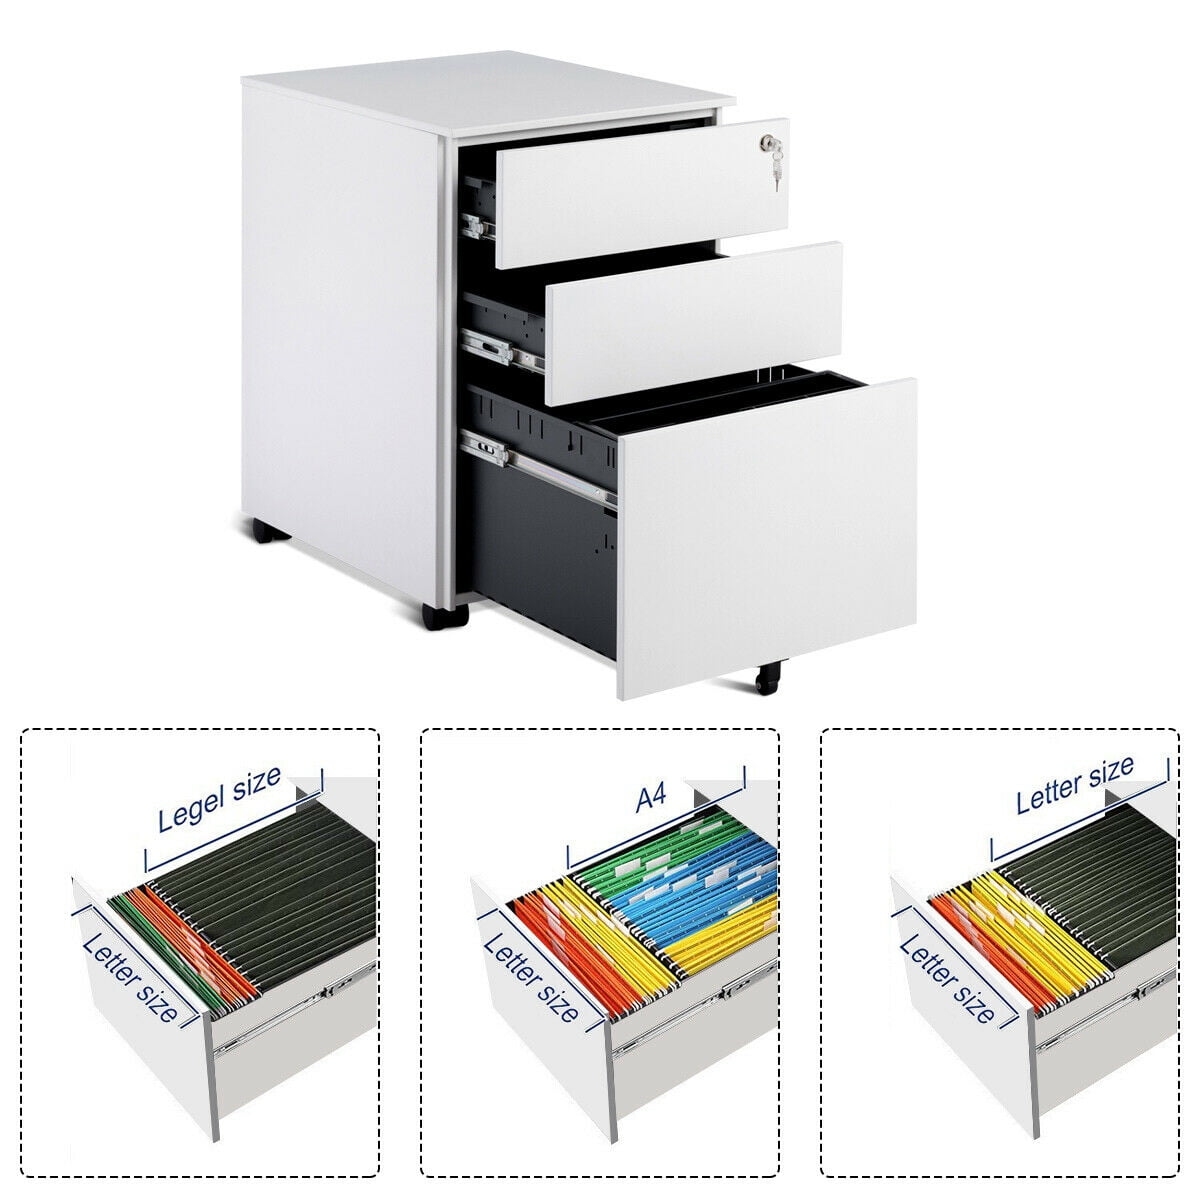 sogesfurniture 3-Drawer Mobile Pedestal File Cabinet with Lock,Rolling File Cabinet,Under Desk Office Drawers for Legal Letter File,Black BHCA-HCCBN003-B 